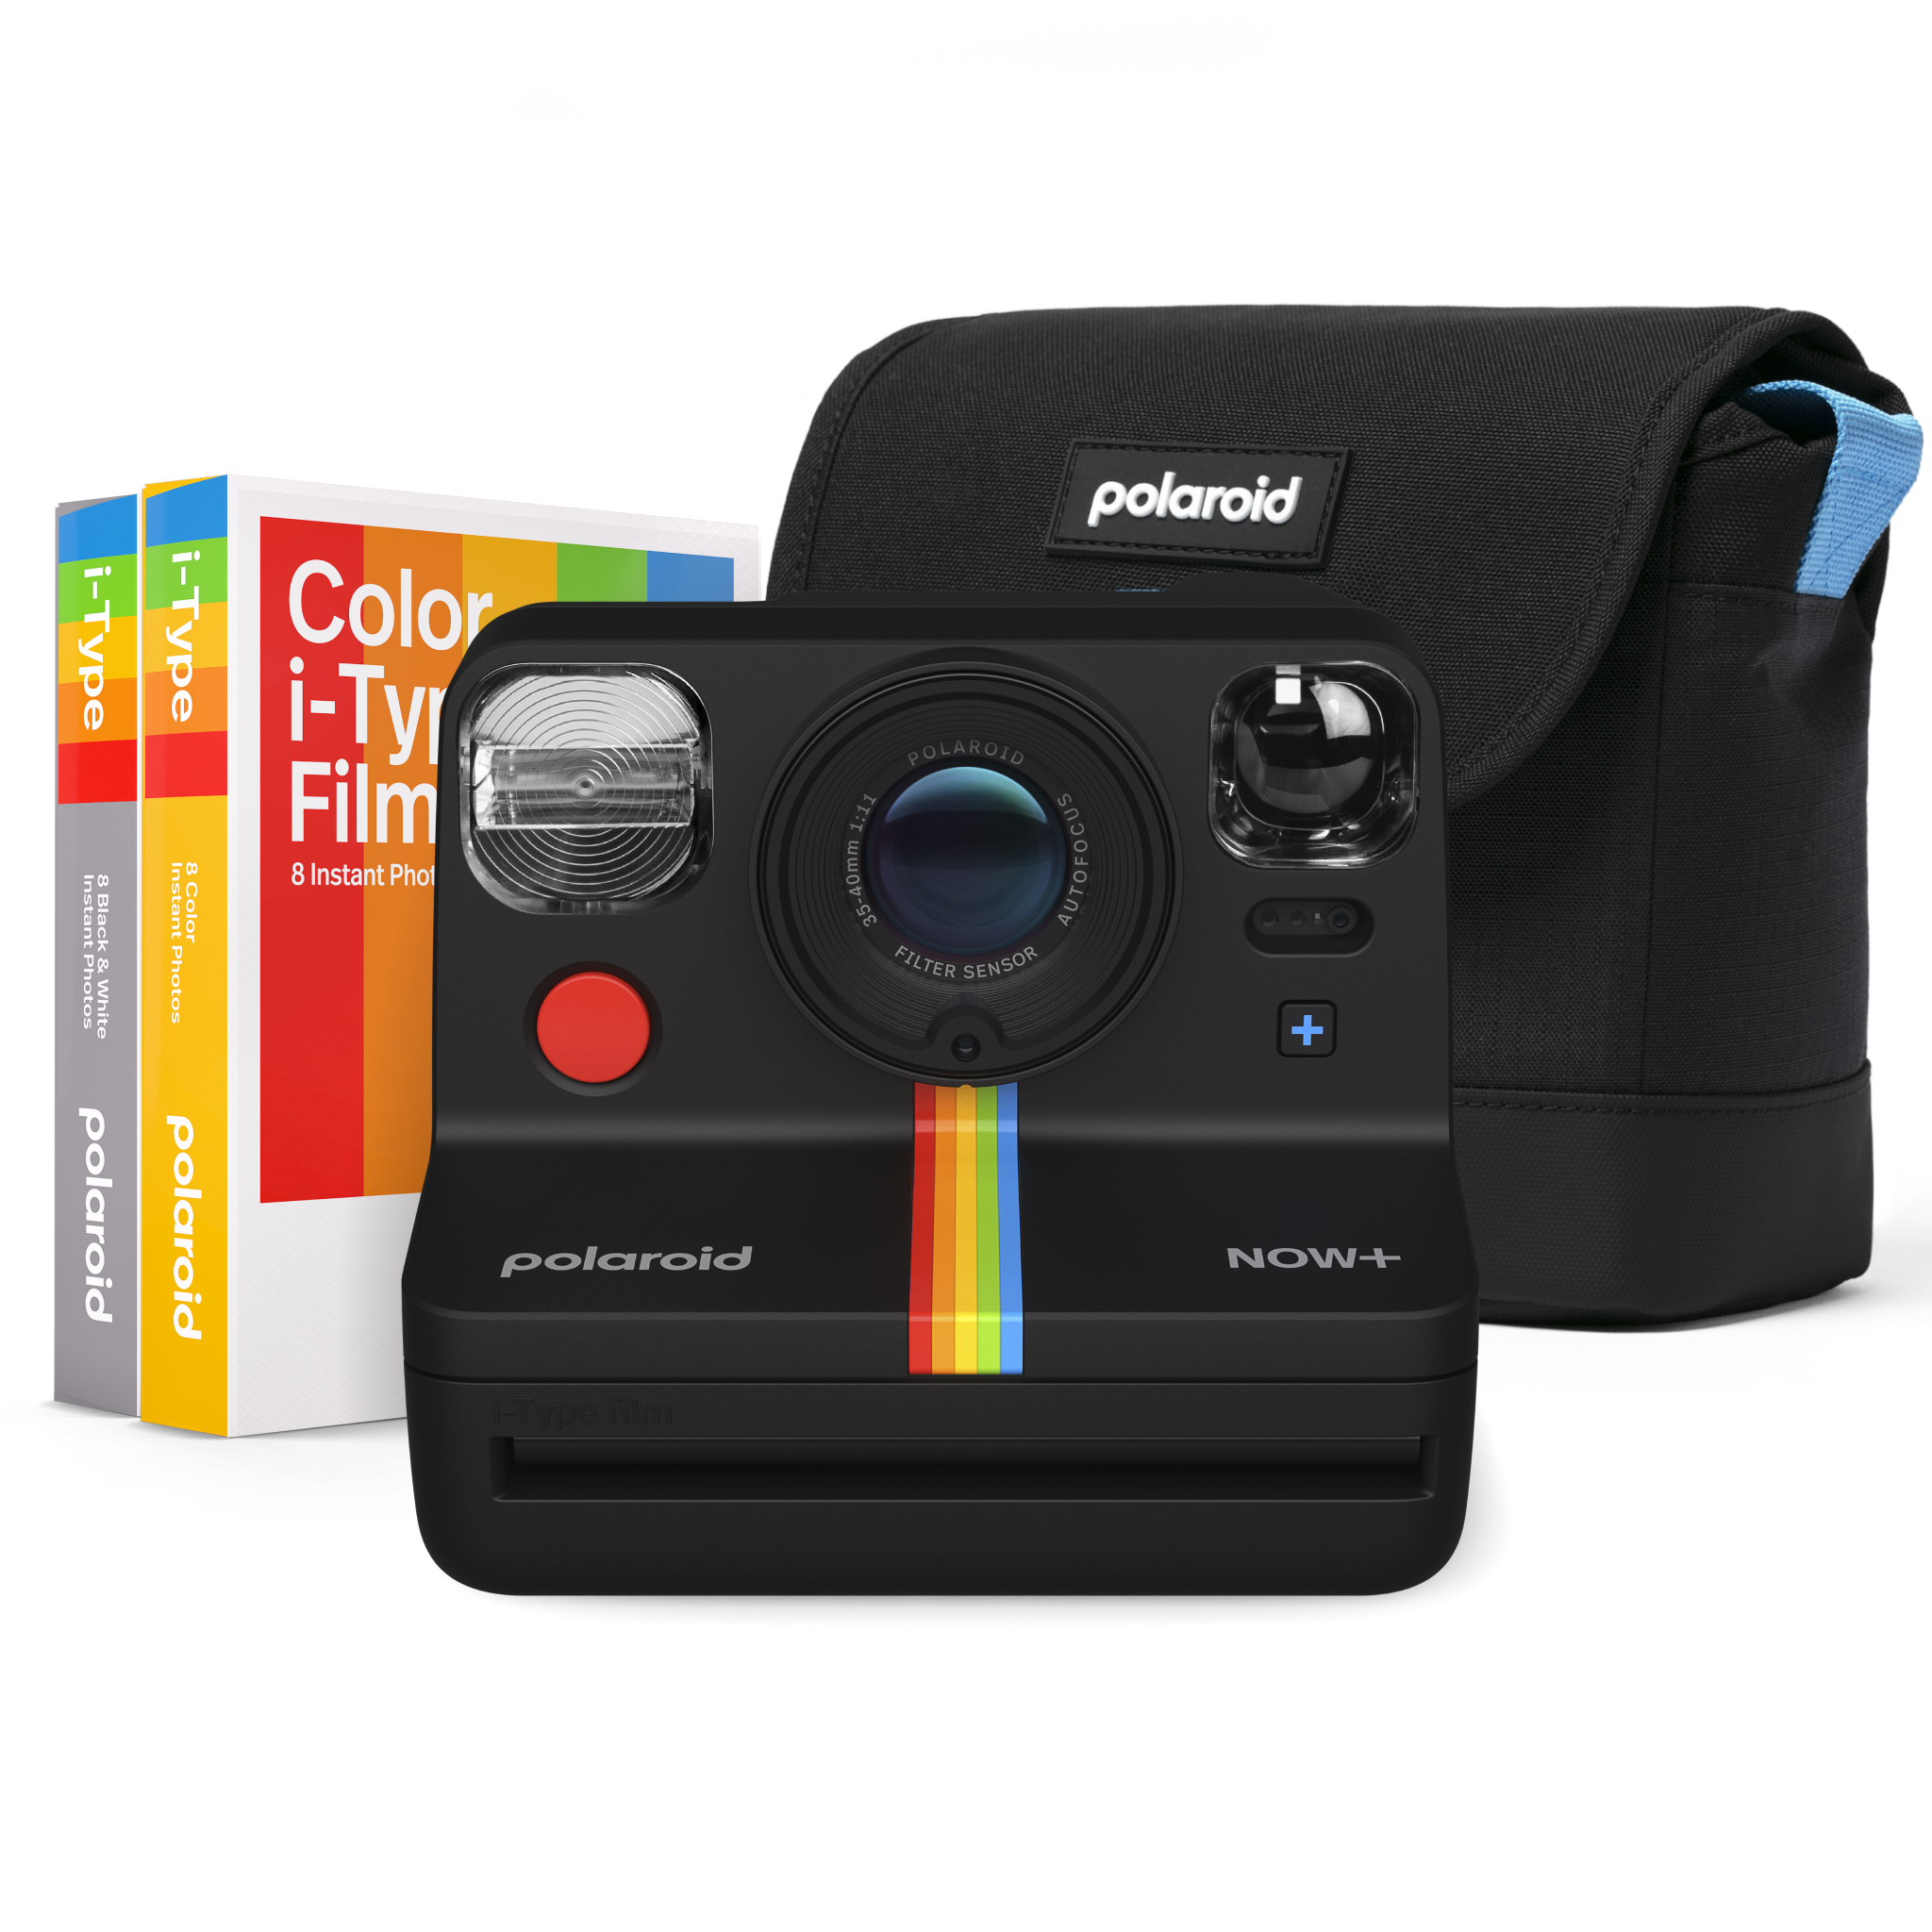  Polaroid Now Instant Film Camera (Blue) + Pack of Film +  Microfiber Cloth : Electronics